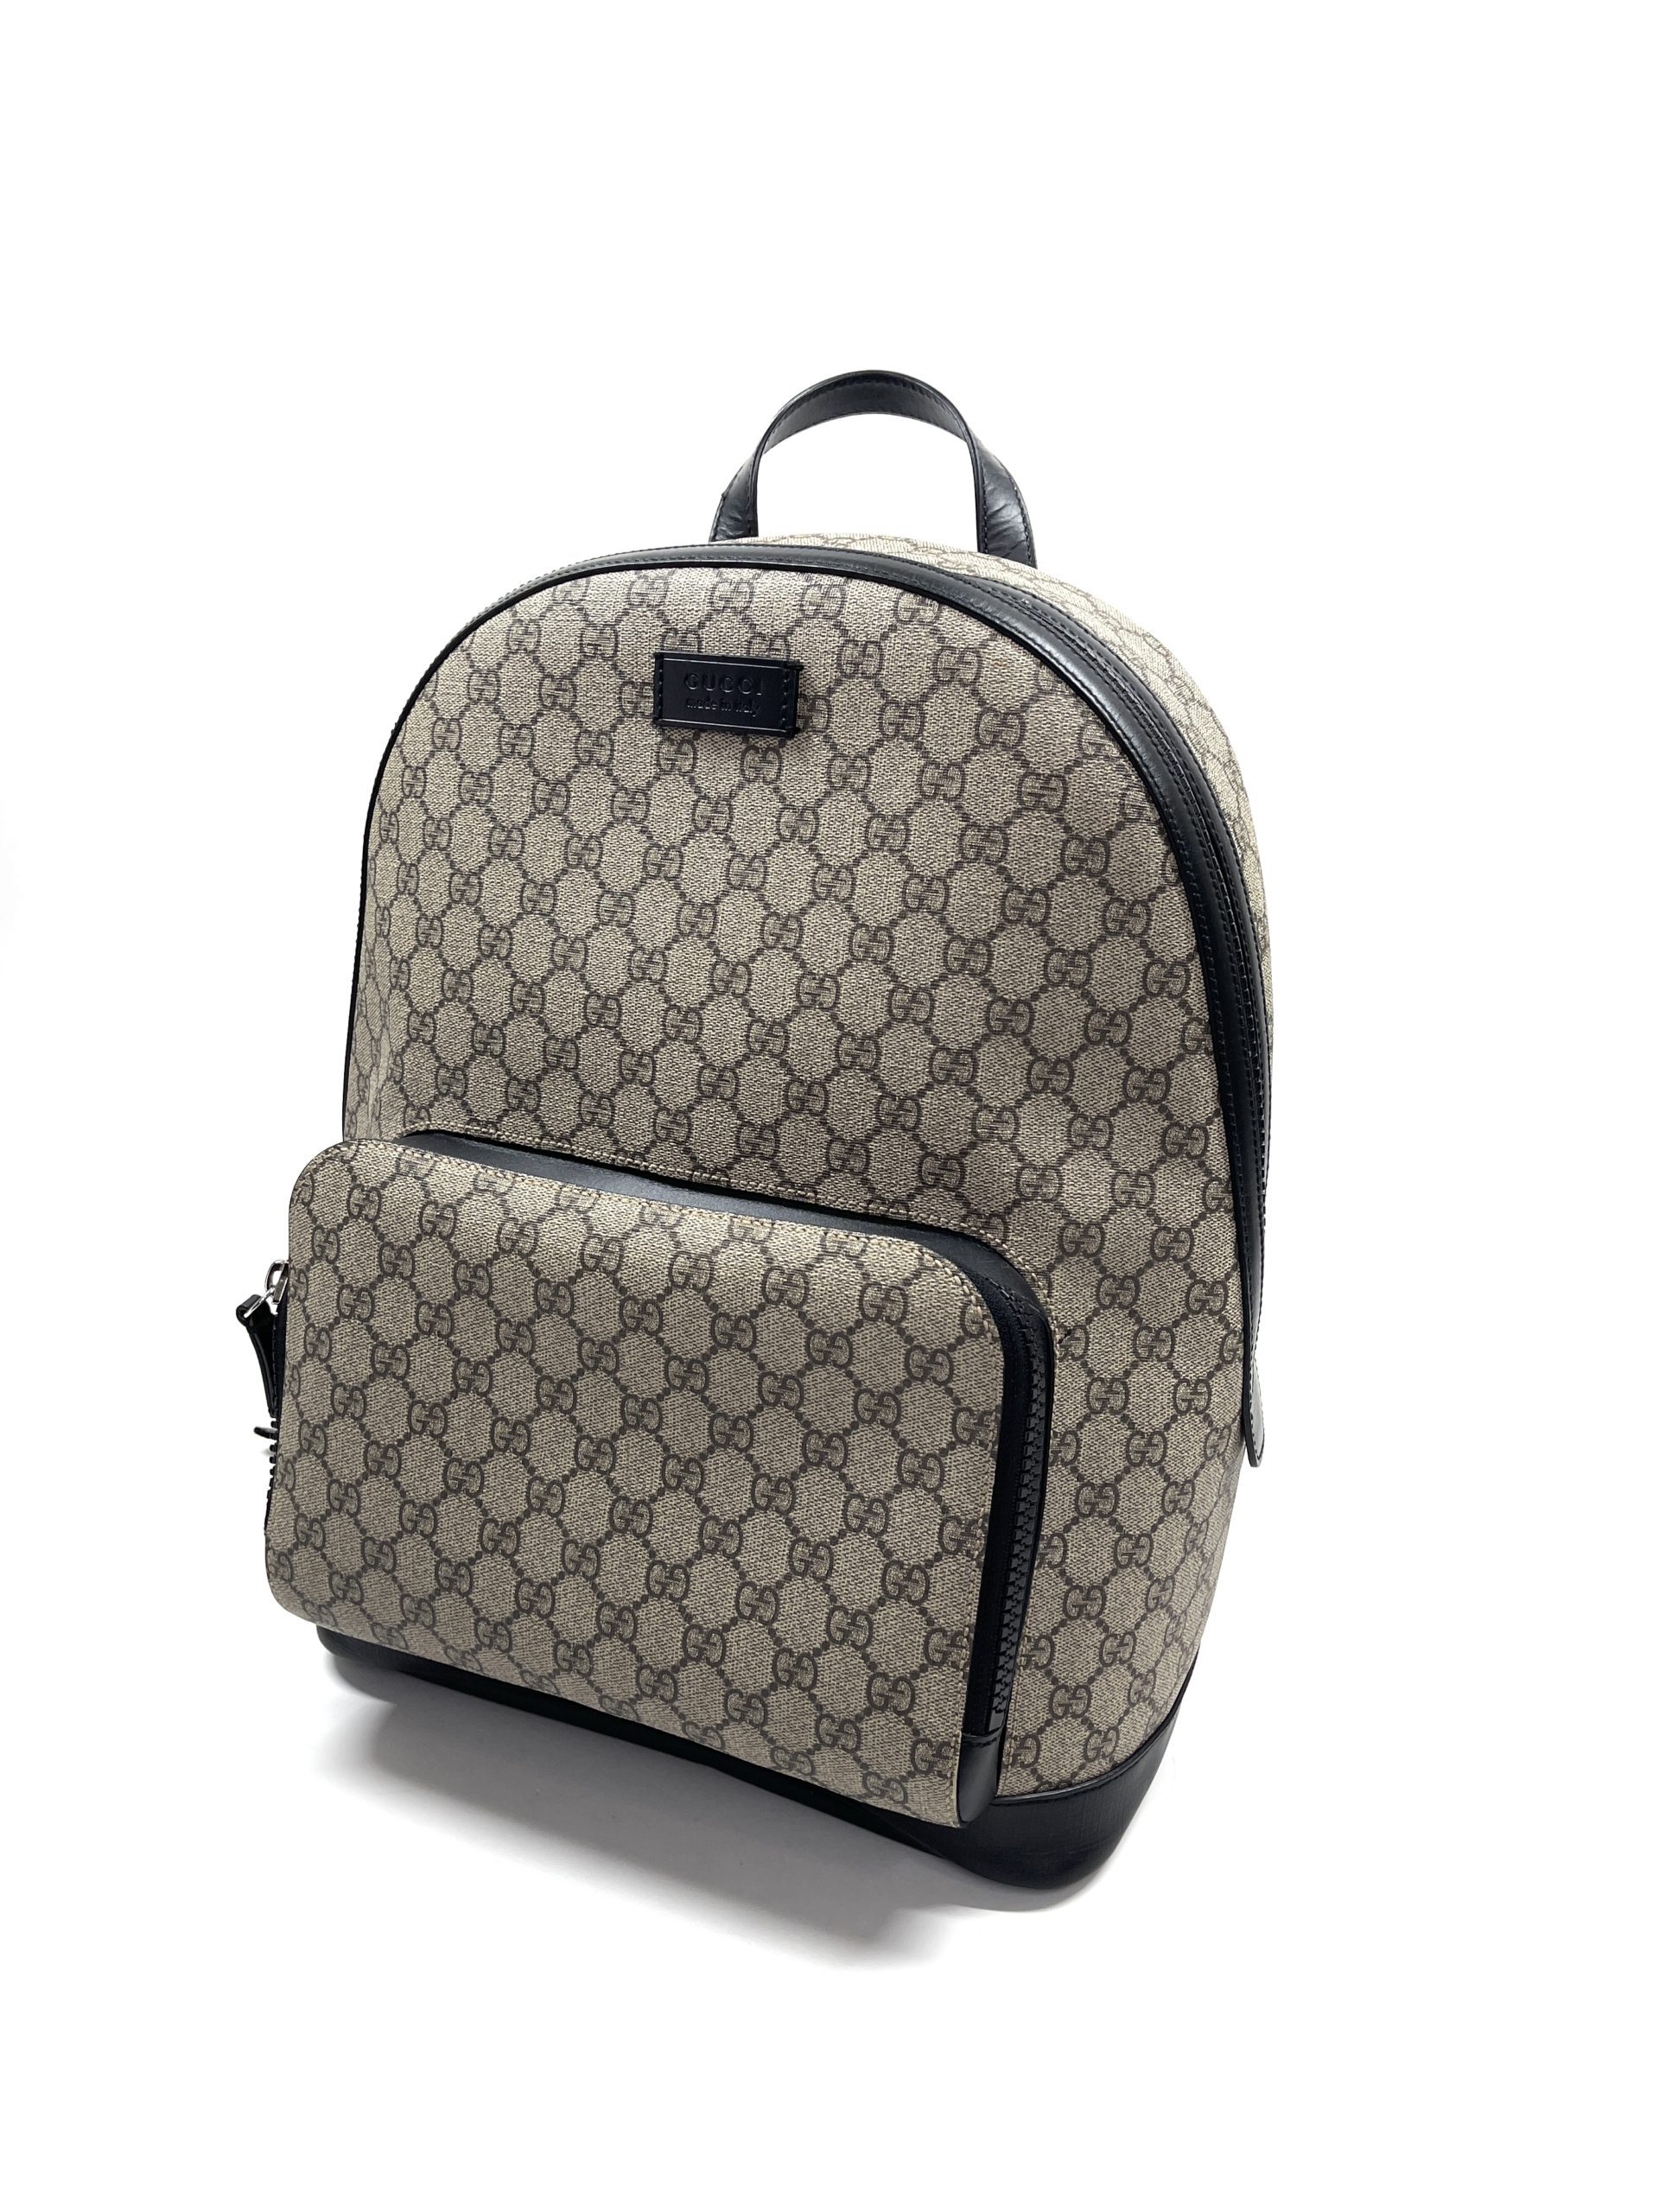 Gucci Men's Jumbo GG Leather-trimmed Backpack - Black - Backpacks